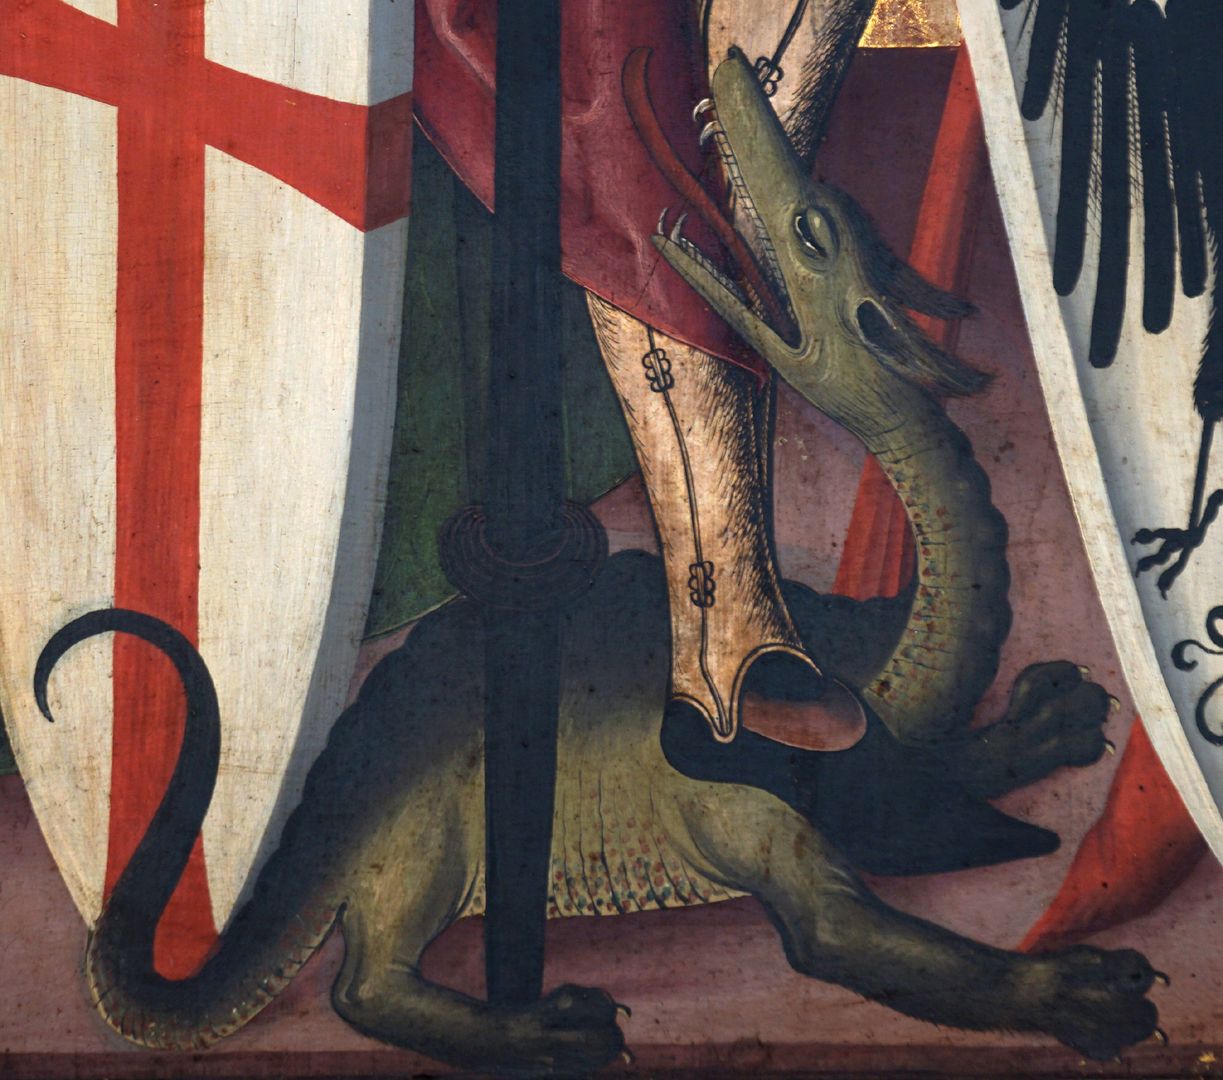 Sebastian-Altar rechter Schreinflügel, Detail mit Drachen